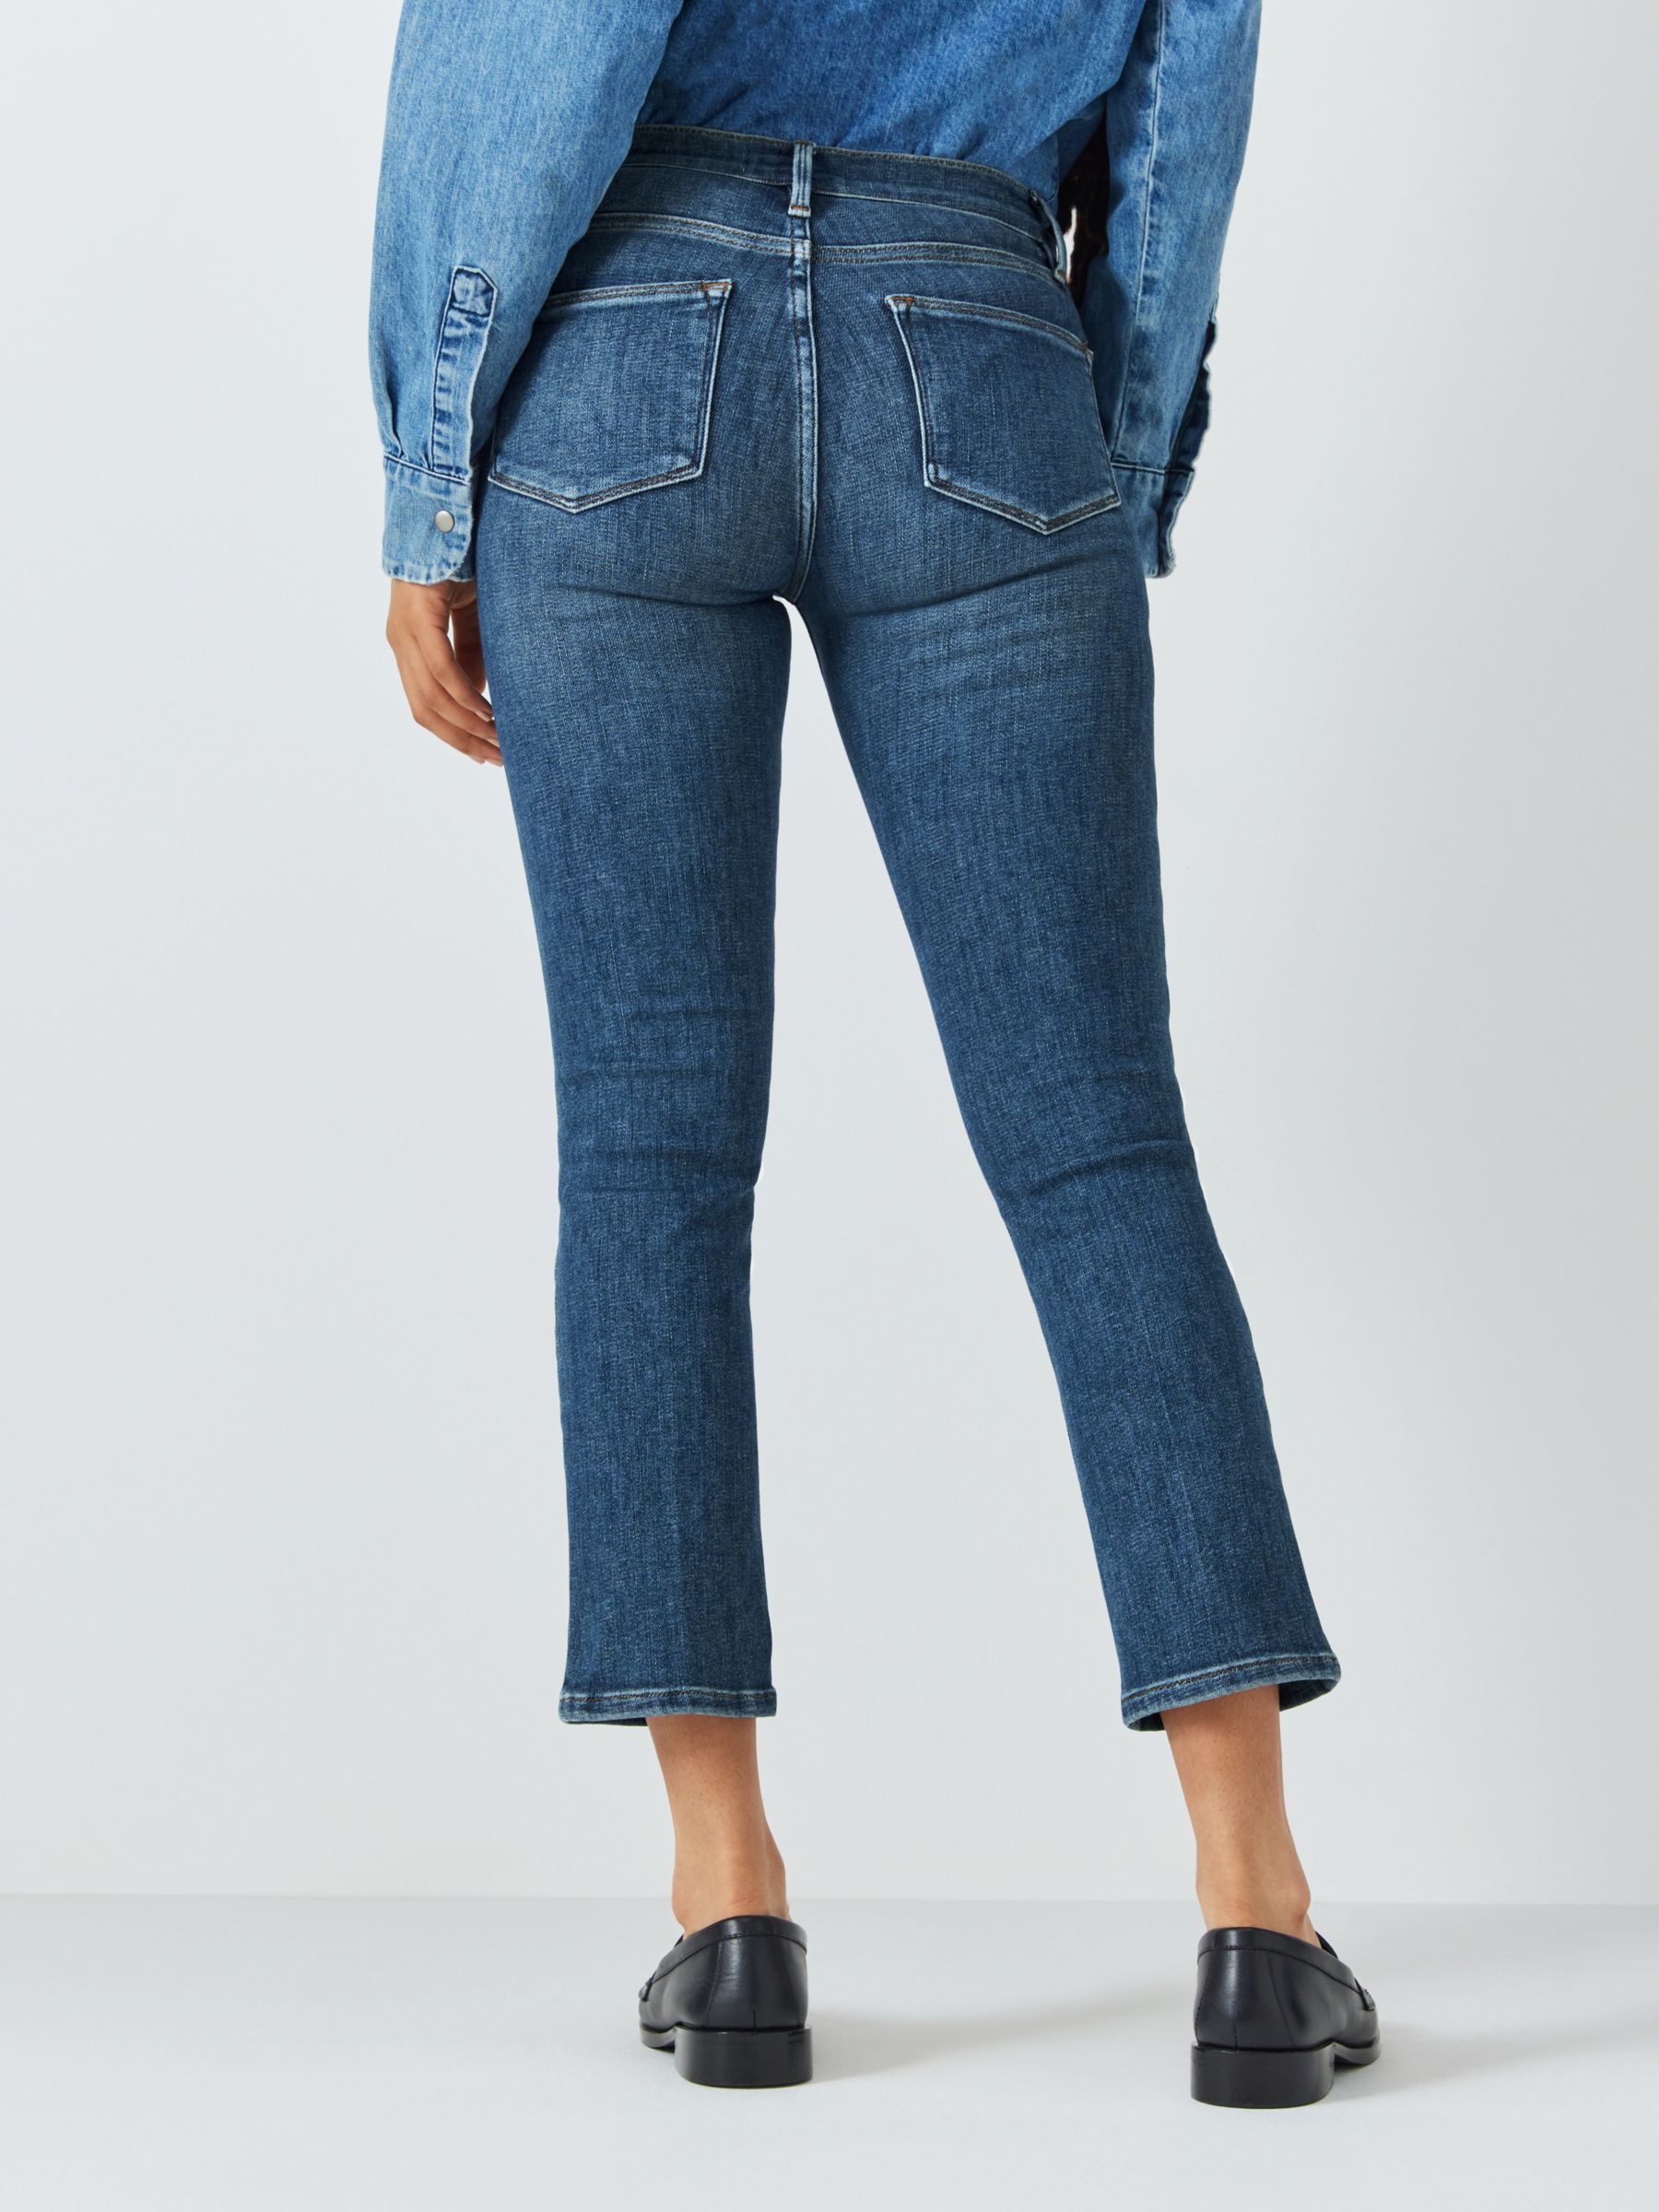 FRAME Le Garcon Straight Jeans, Bestia, 24